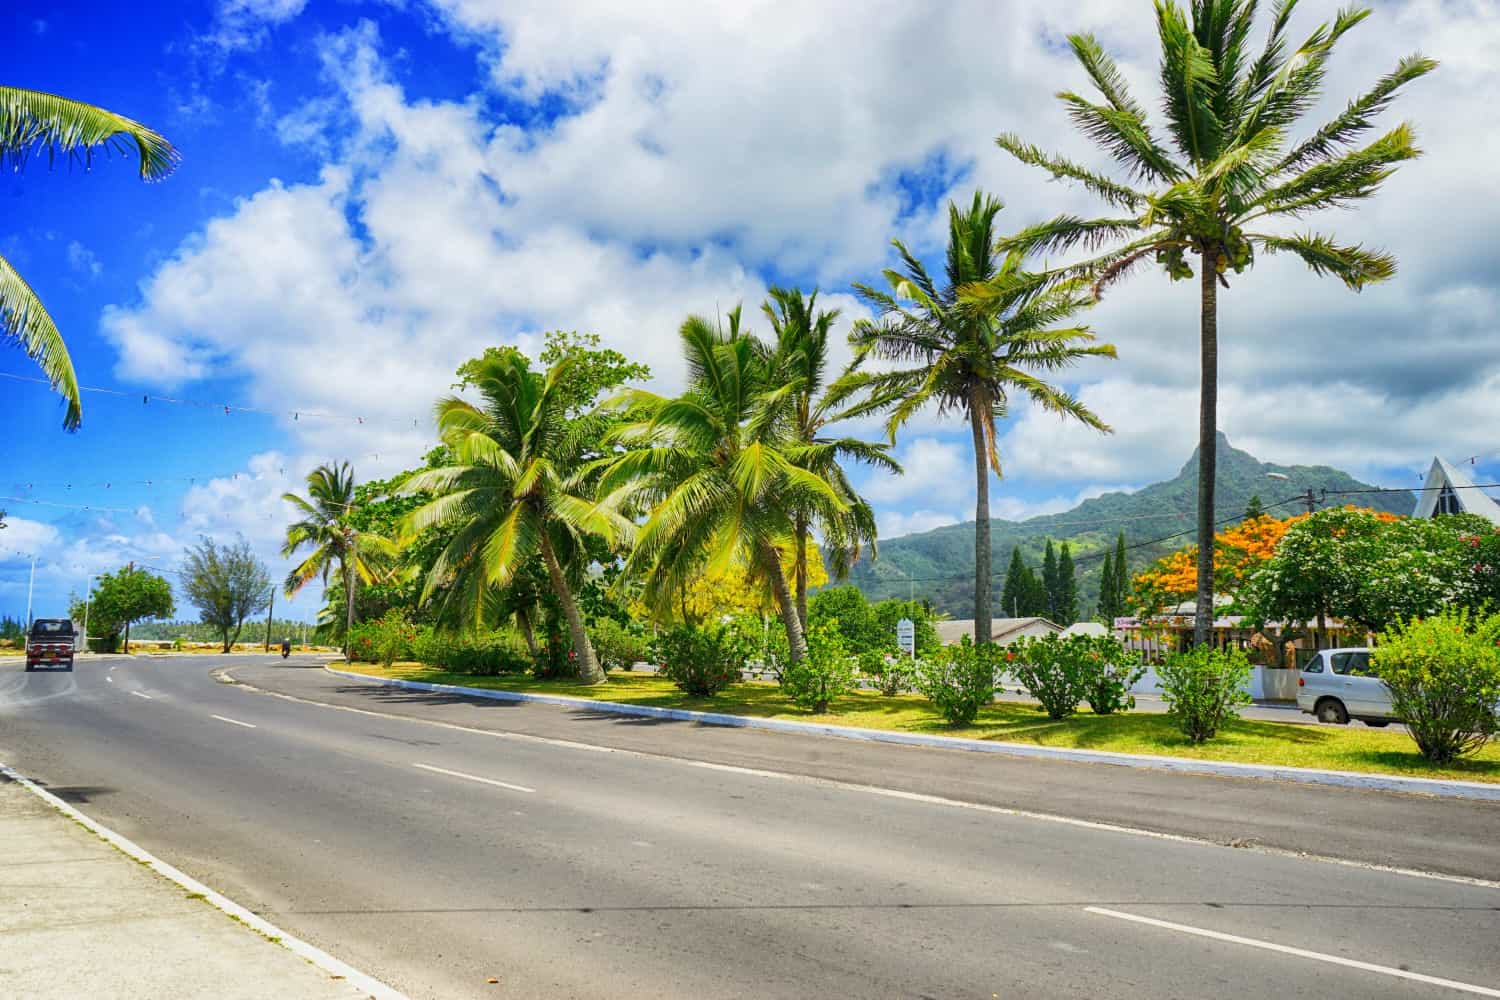 The main road in Rarotonga